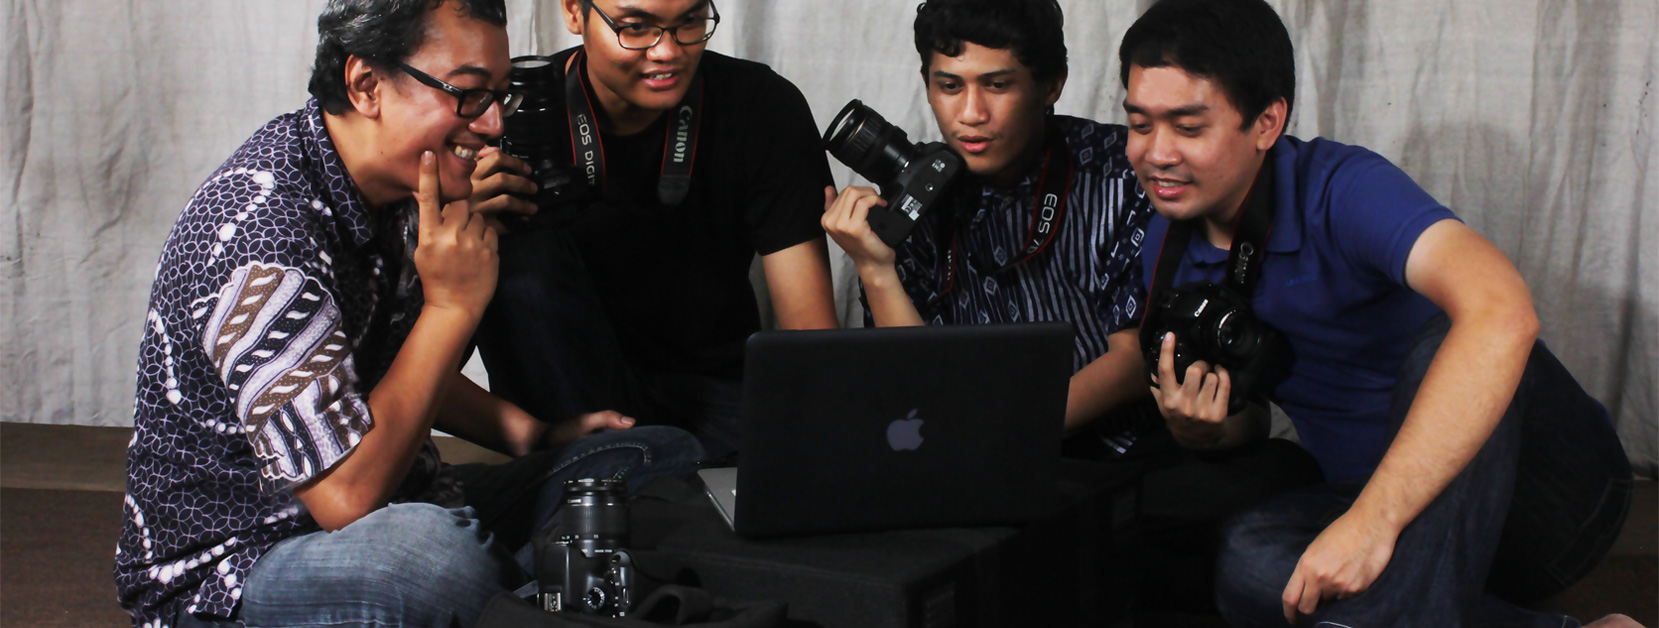 Sekolah kursus seni photography Di Indonesia